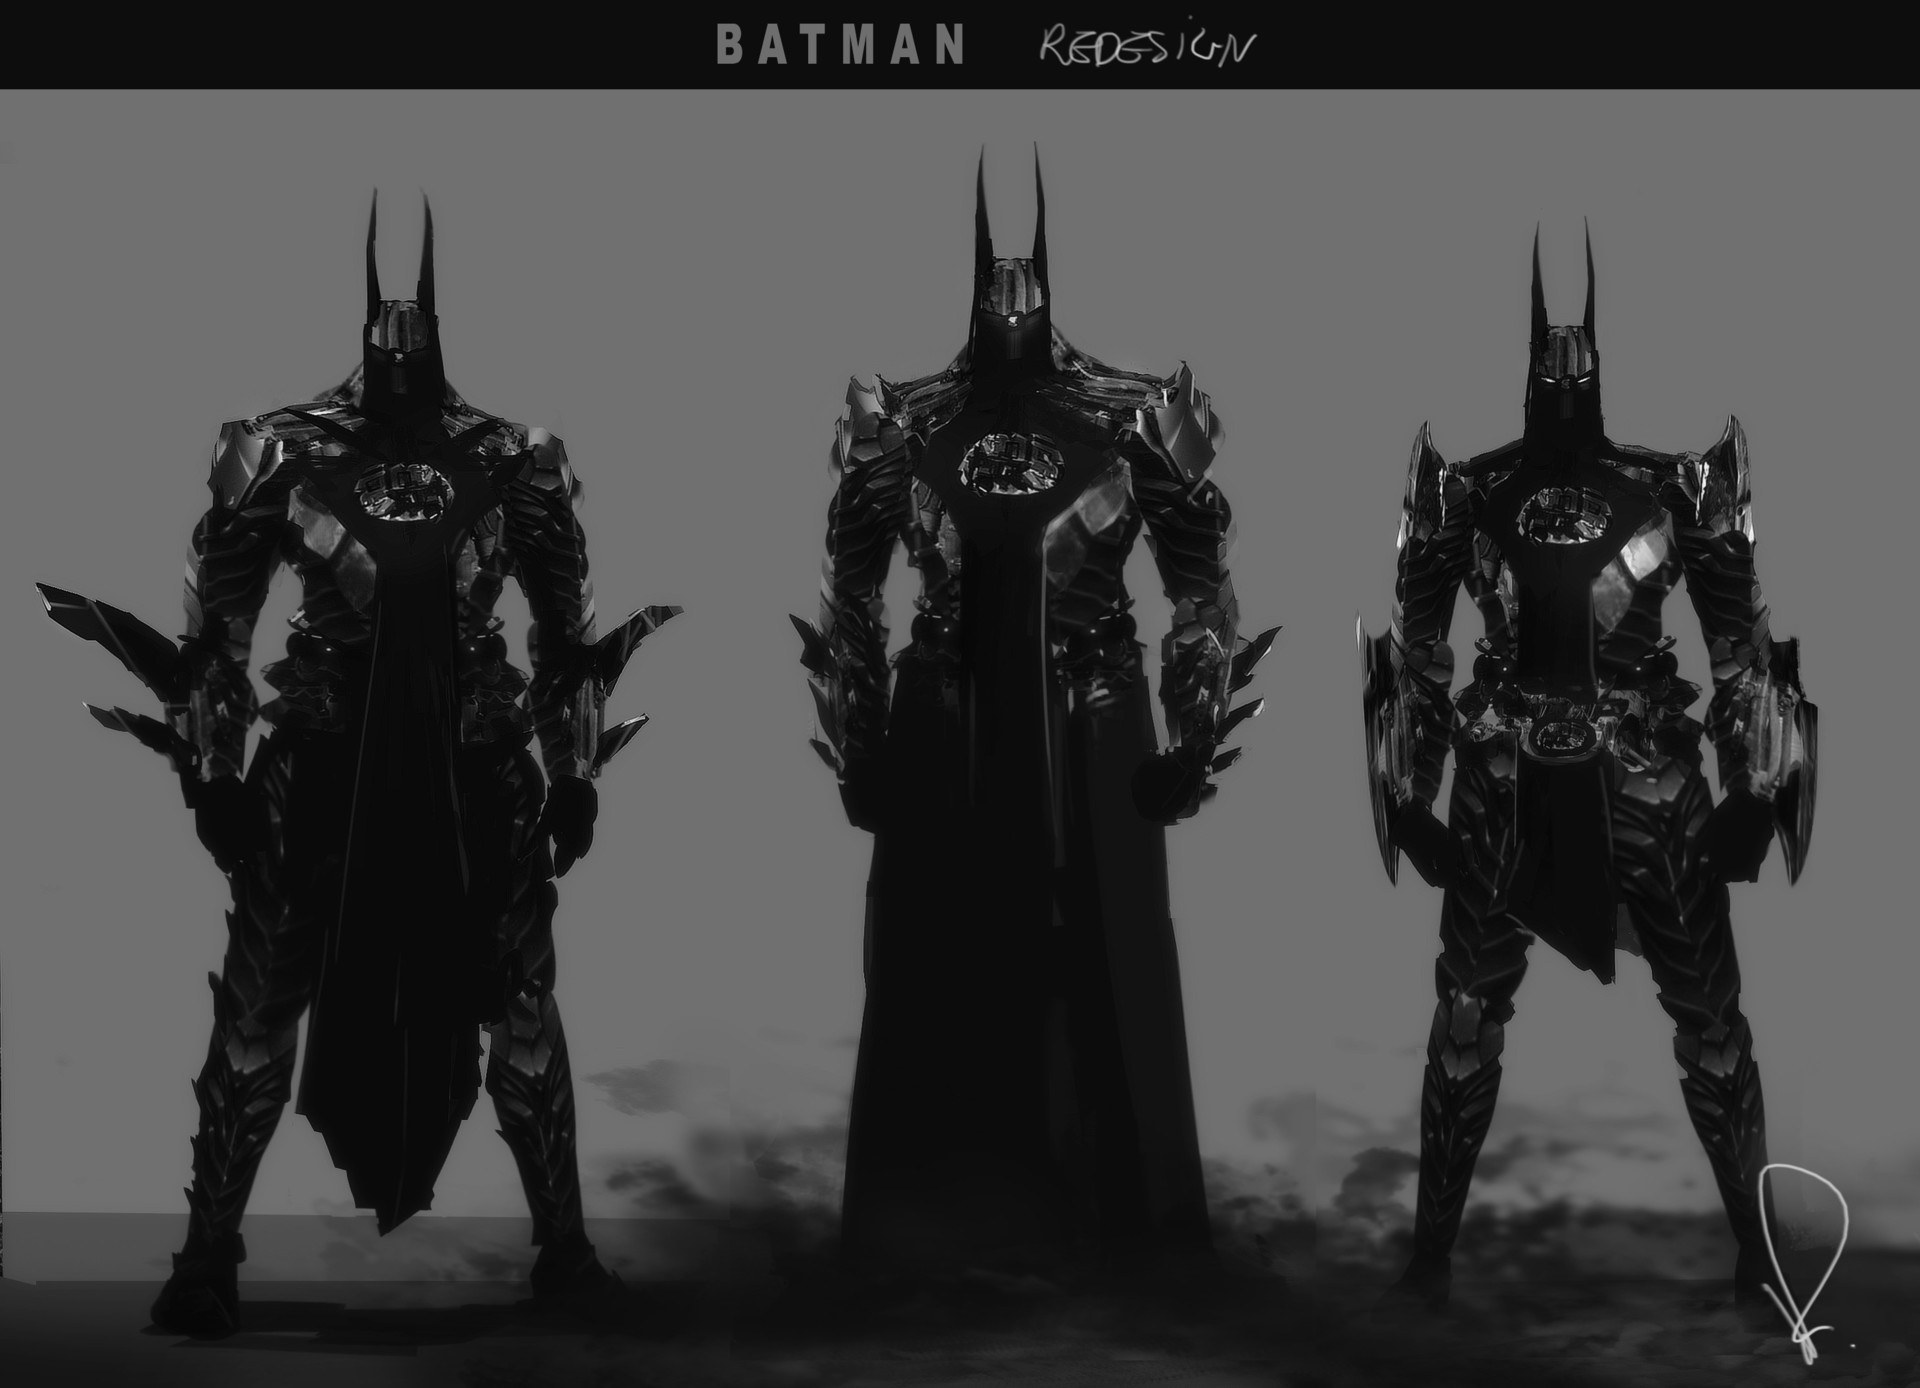 ArtStation - Batman redesign